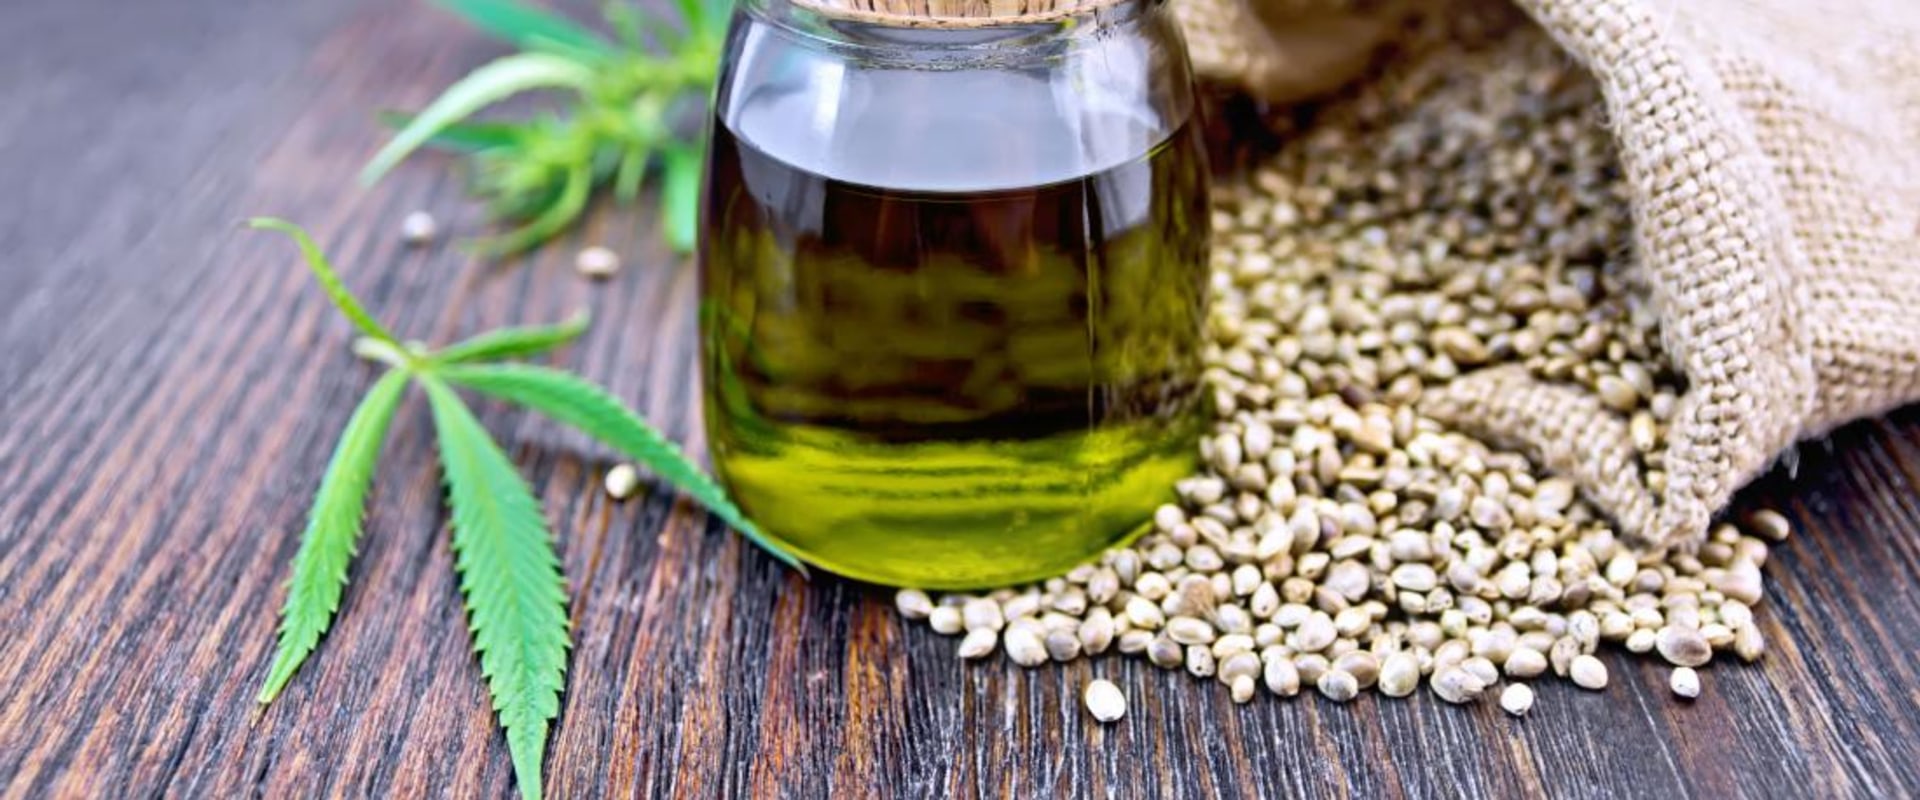 The Benefits of Hemp Seed Oil: Is Hemp Anti-Inflammatory?